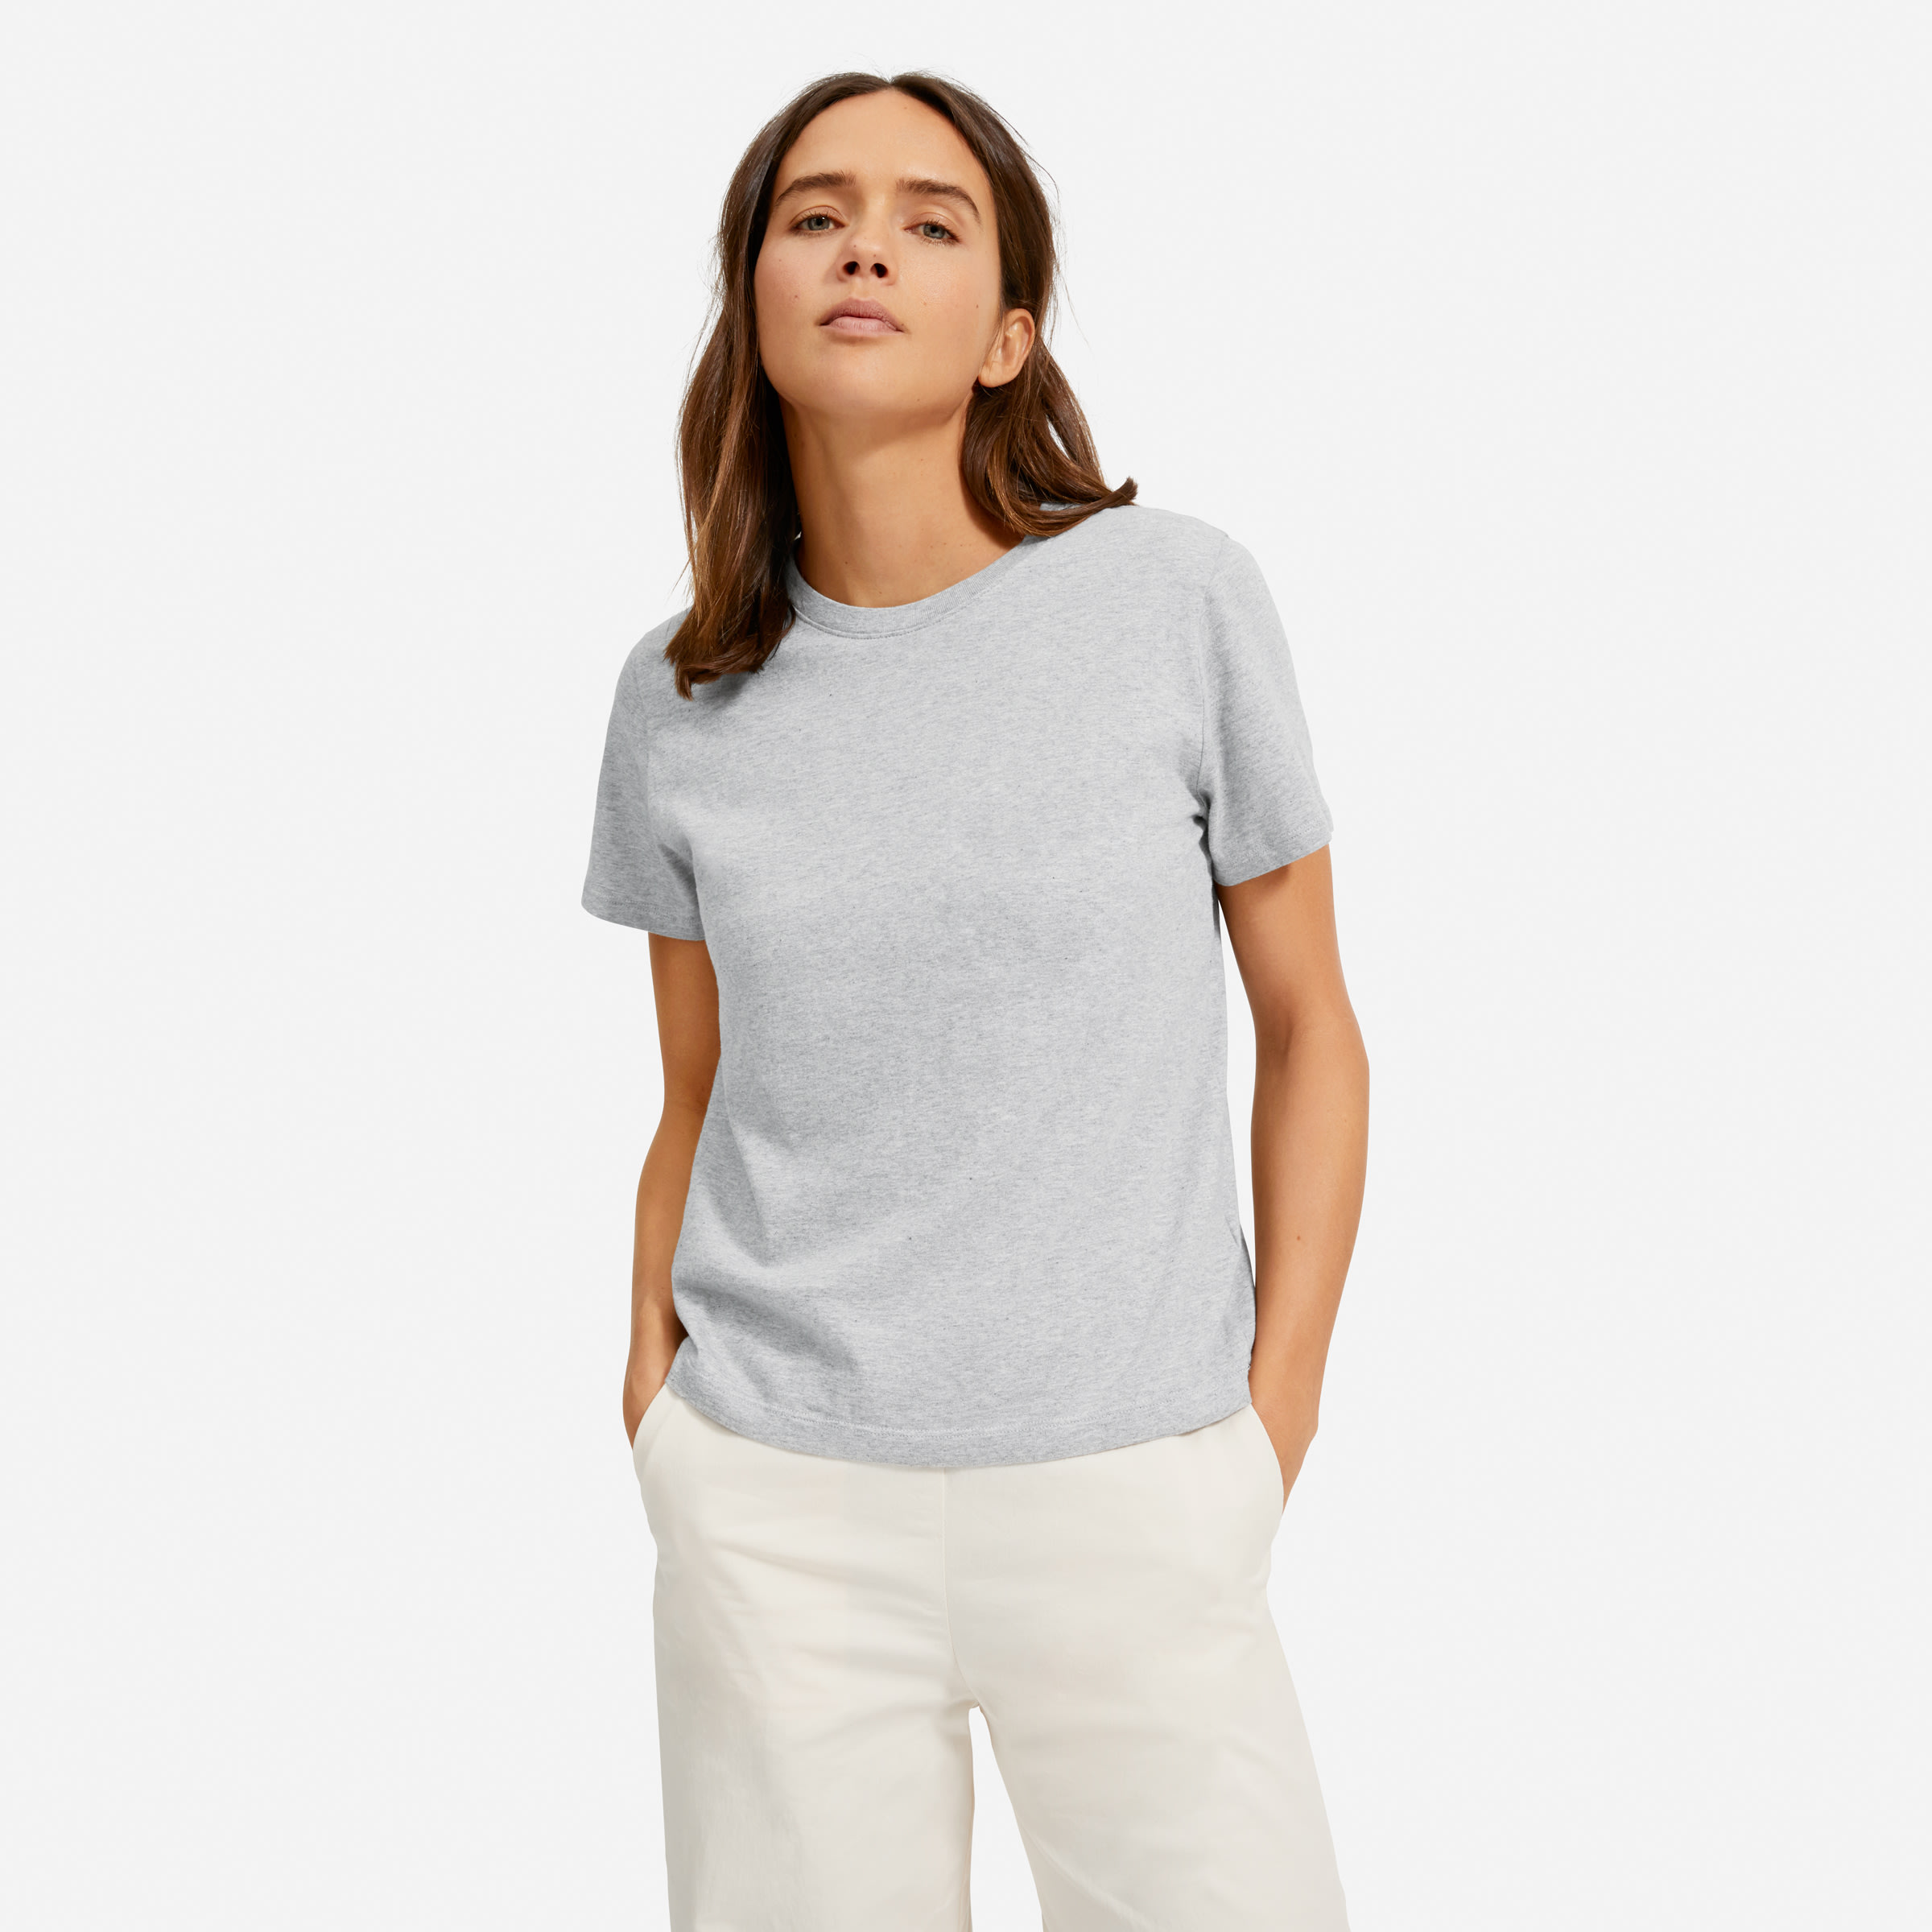 Women's Tops, T-Shirts, Blouses & Shirts – Everlane